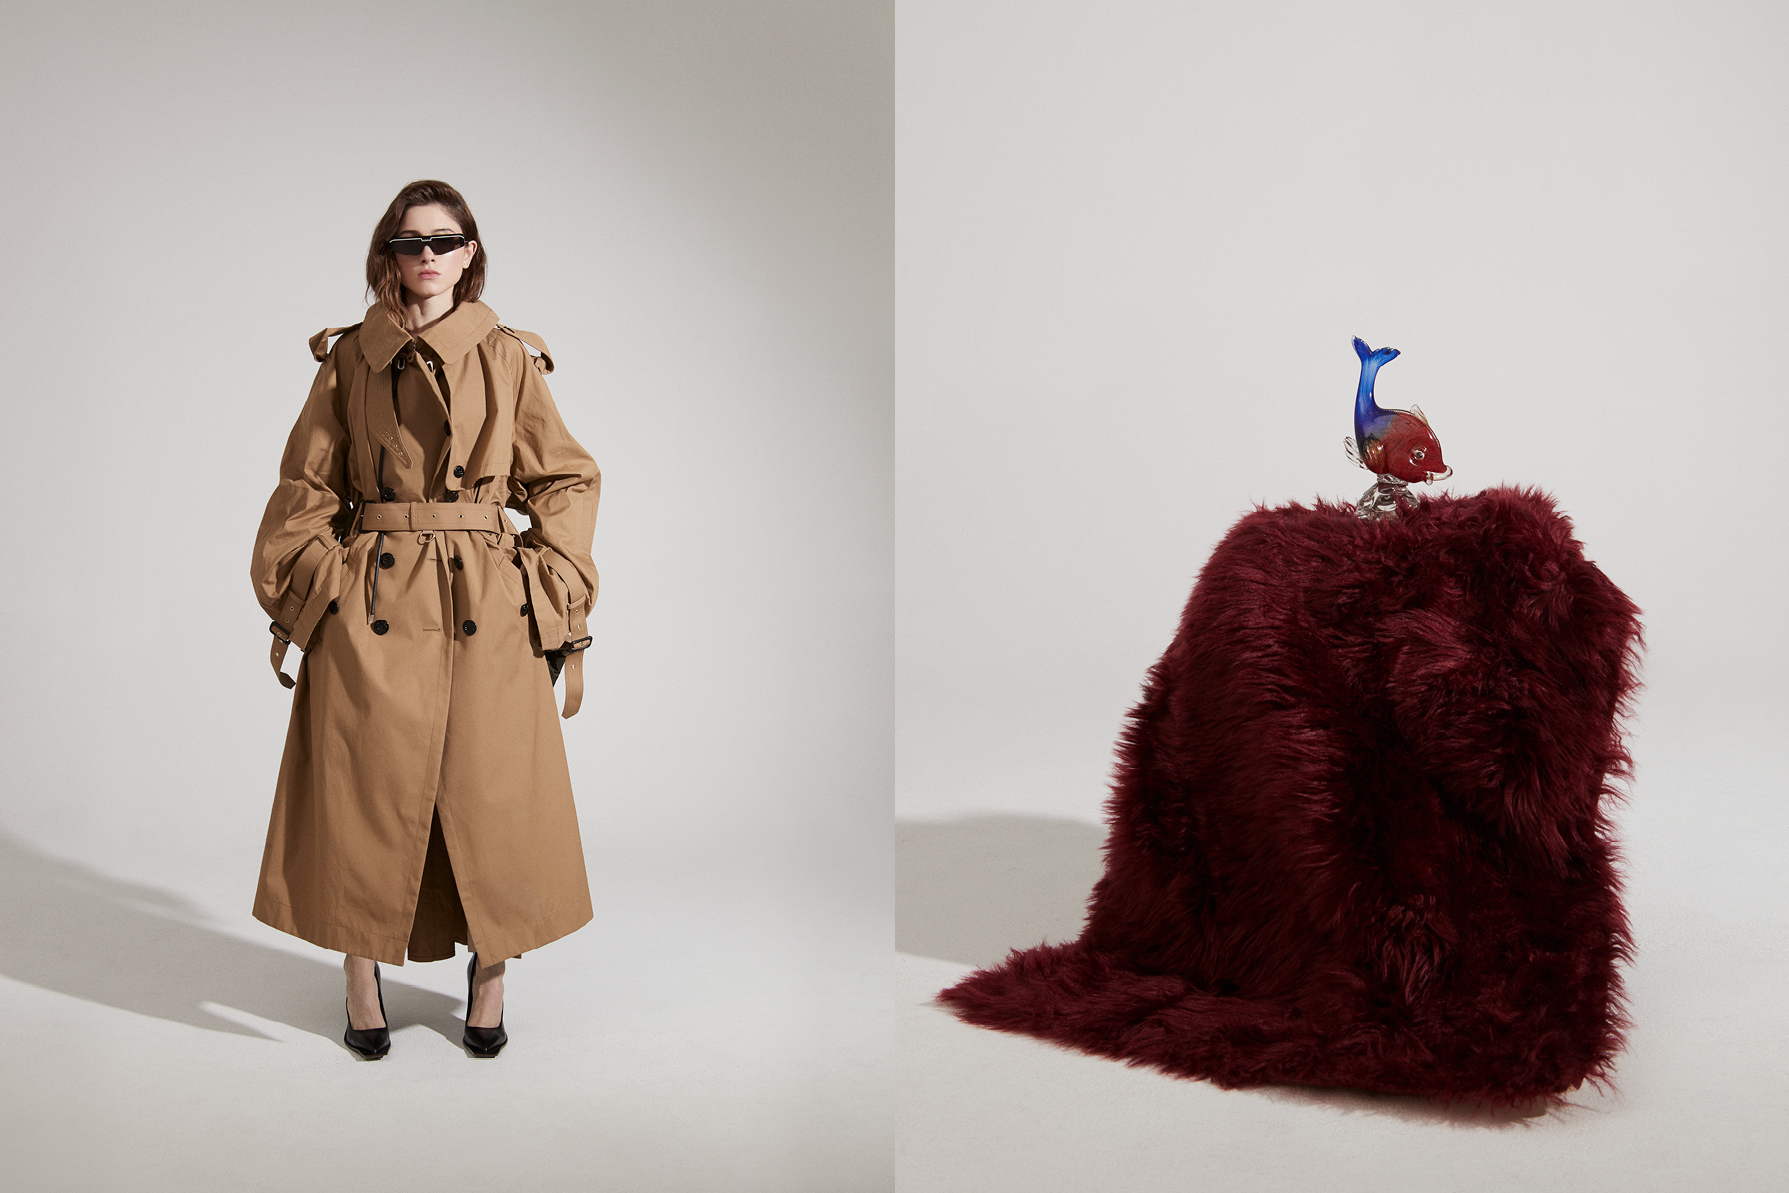 Coat by Sacai. Shoes by Acne Studios. Sunglasses by Balenciaga.